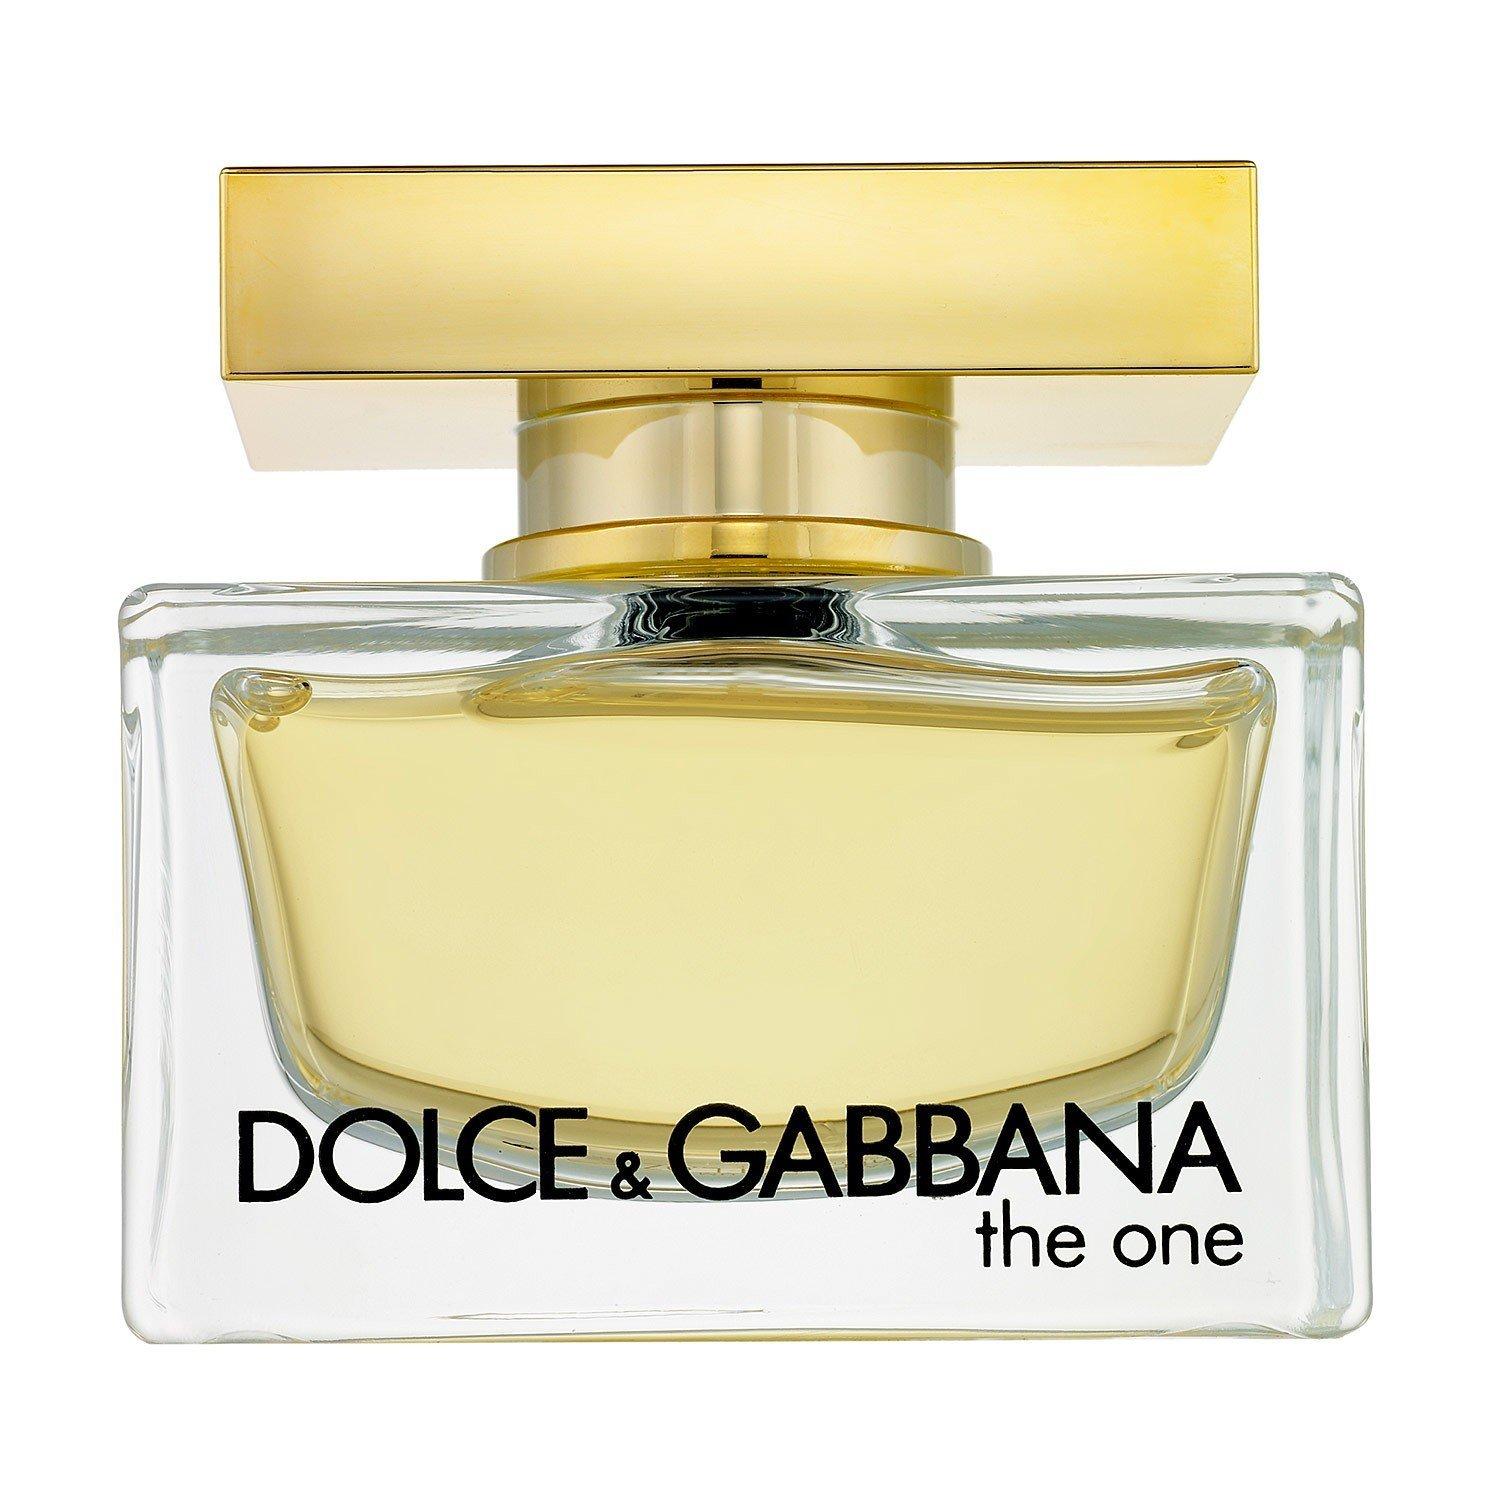 Дольче габбана the one купить. Духи лольче габано Зевар. Dolce & Gabbana the one women EDP, 75 ml. Dolce Gabbana the one 50ml. Dolce Gabbana the one 75 ml.